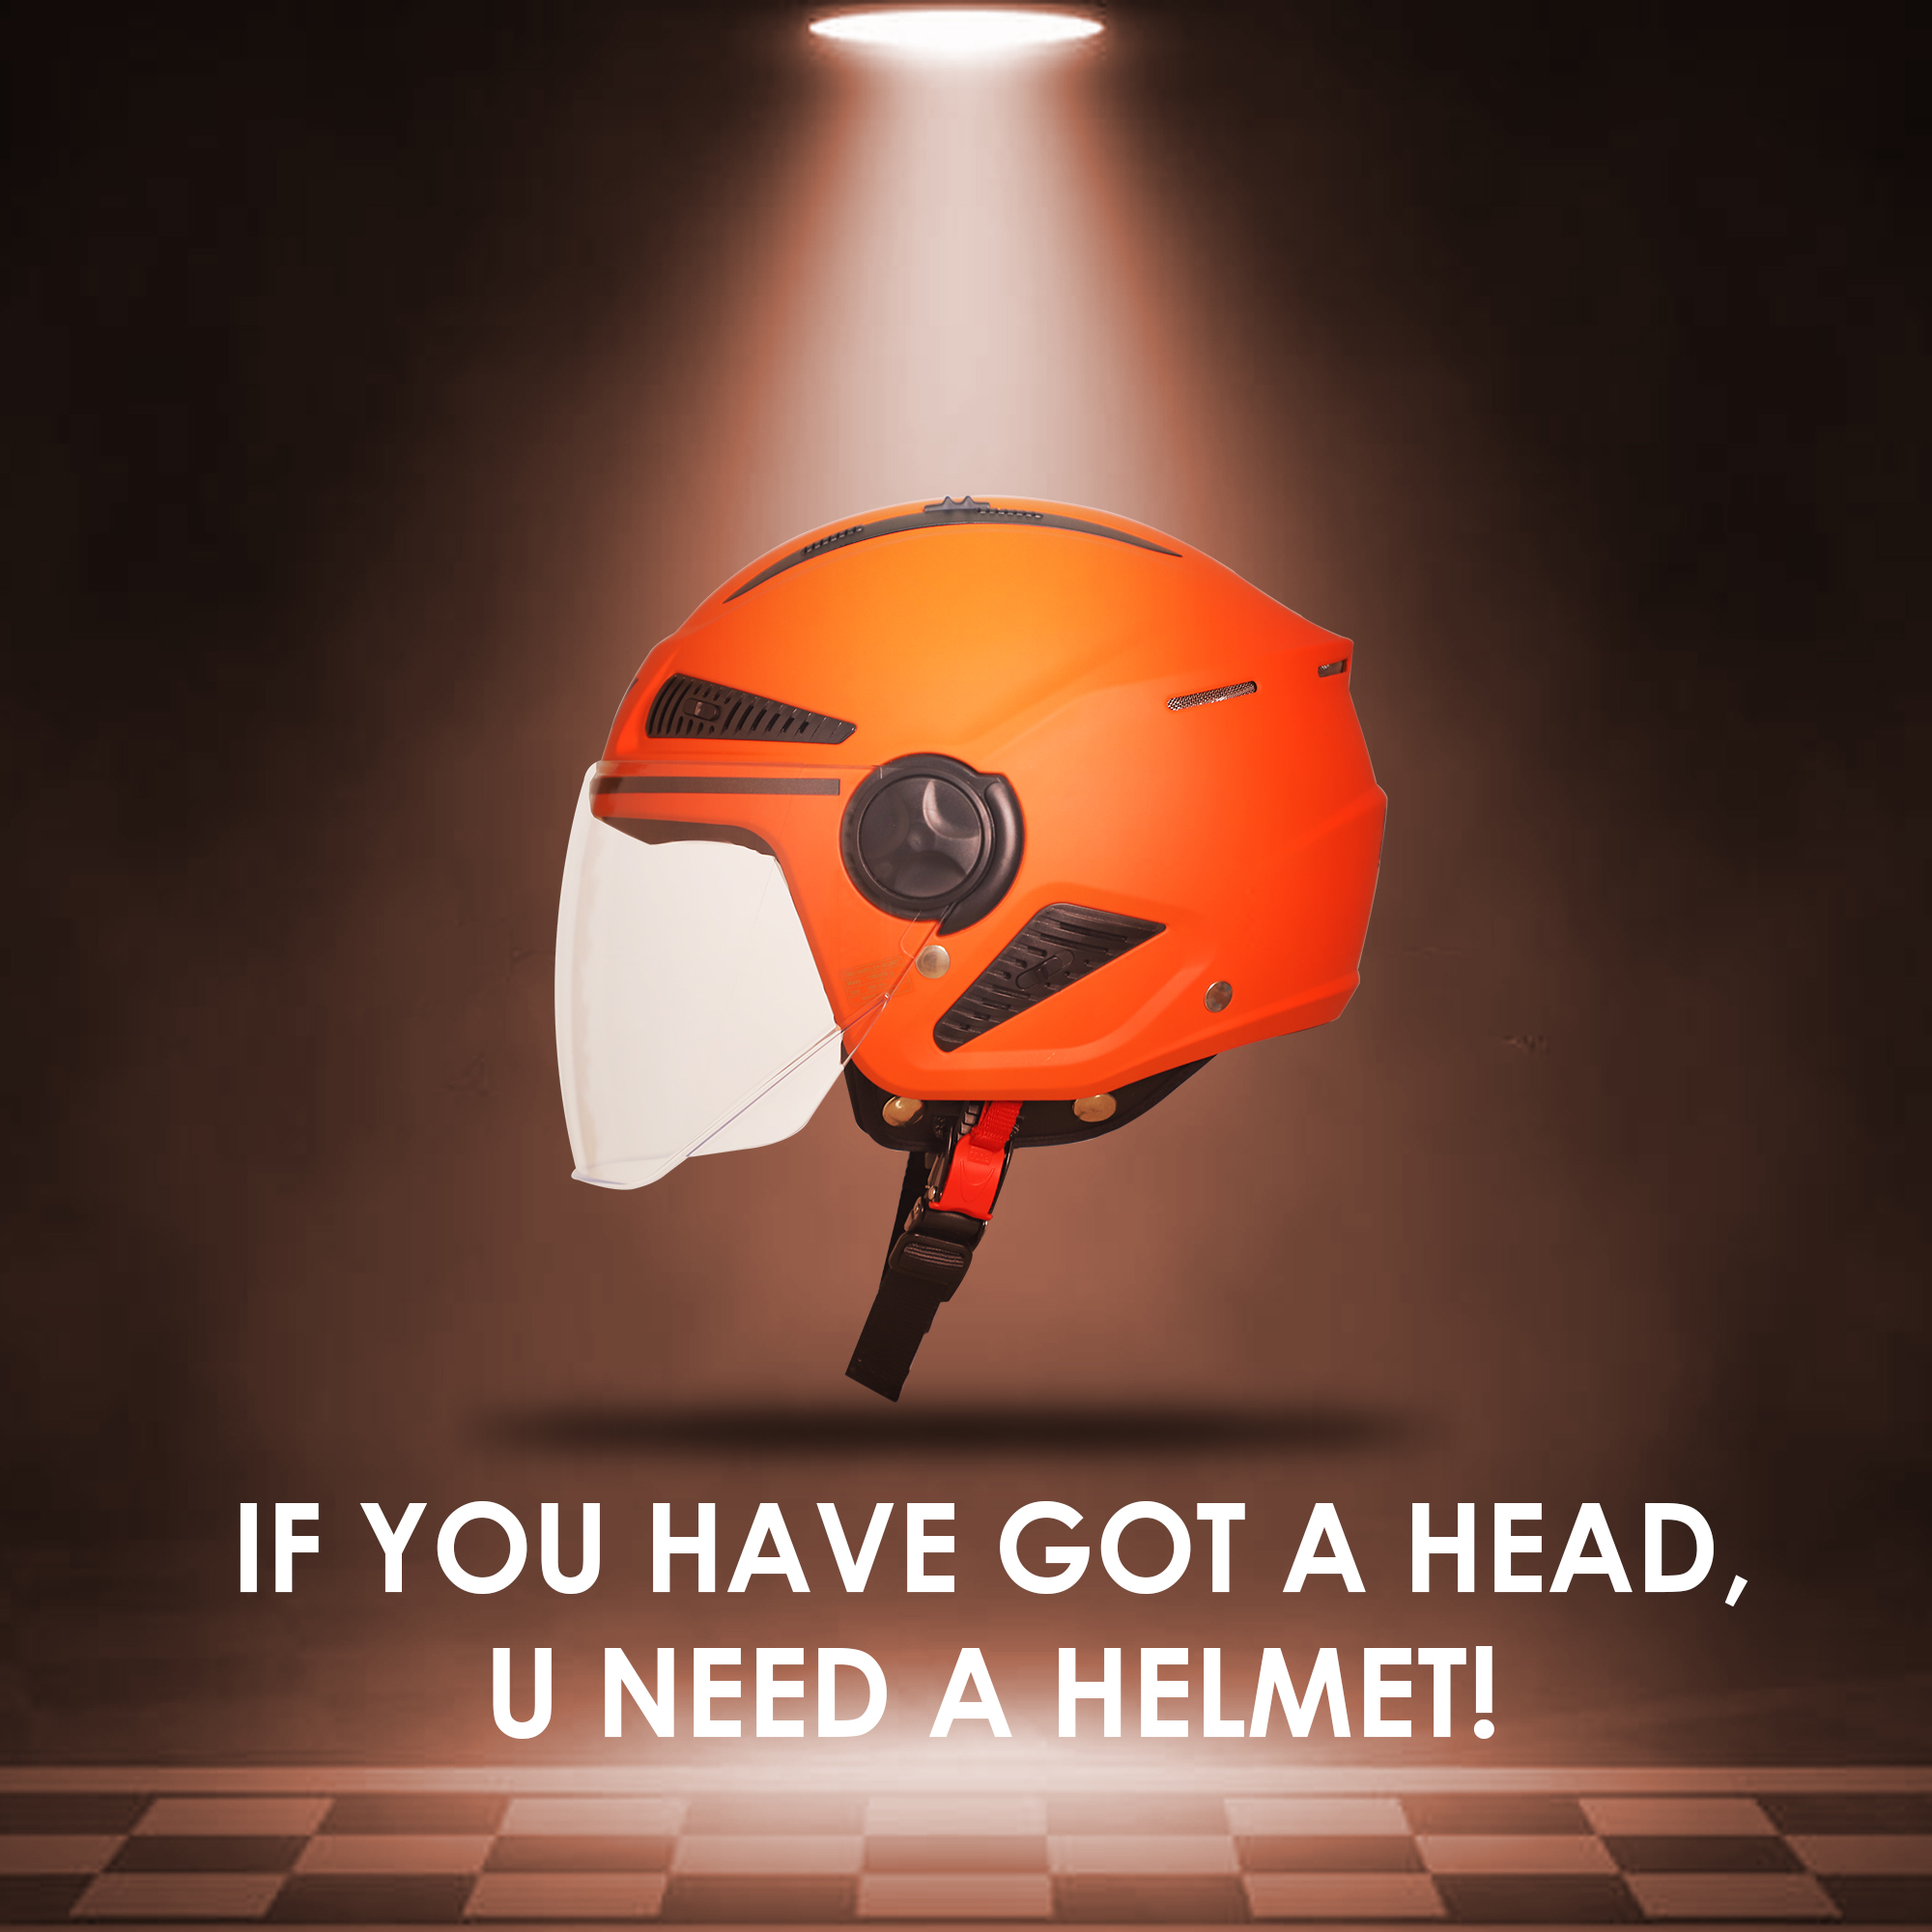 Steelbird SBH-24 Boxx ISI Certified Open Face Helmet For Men And Women (Matt Coral Orange With Clear Visor)